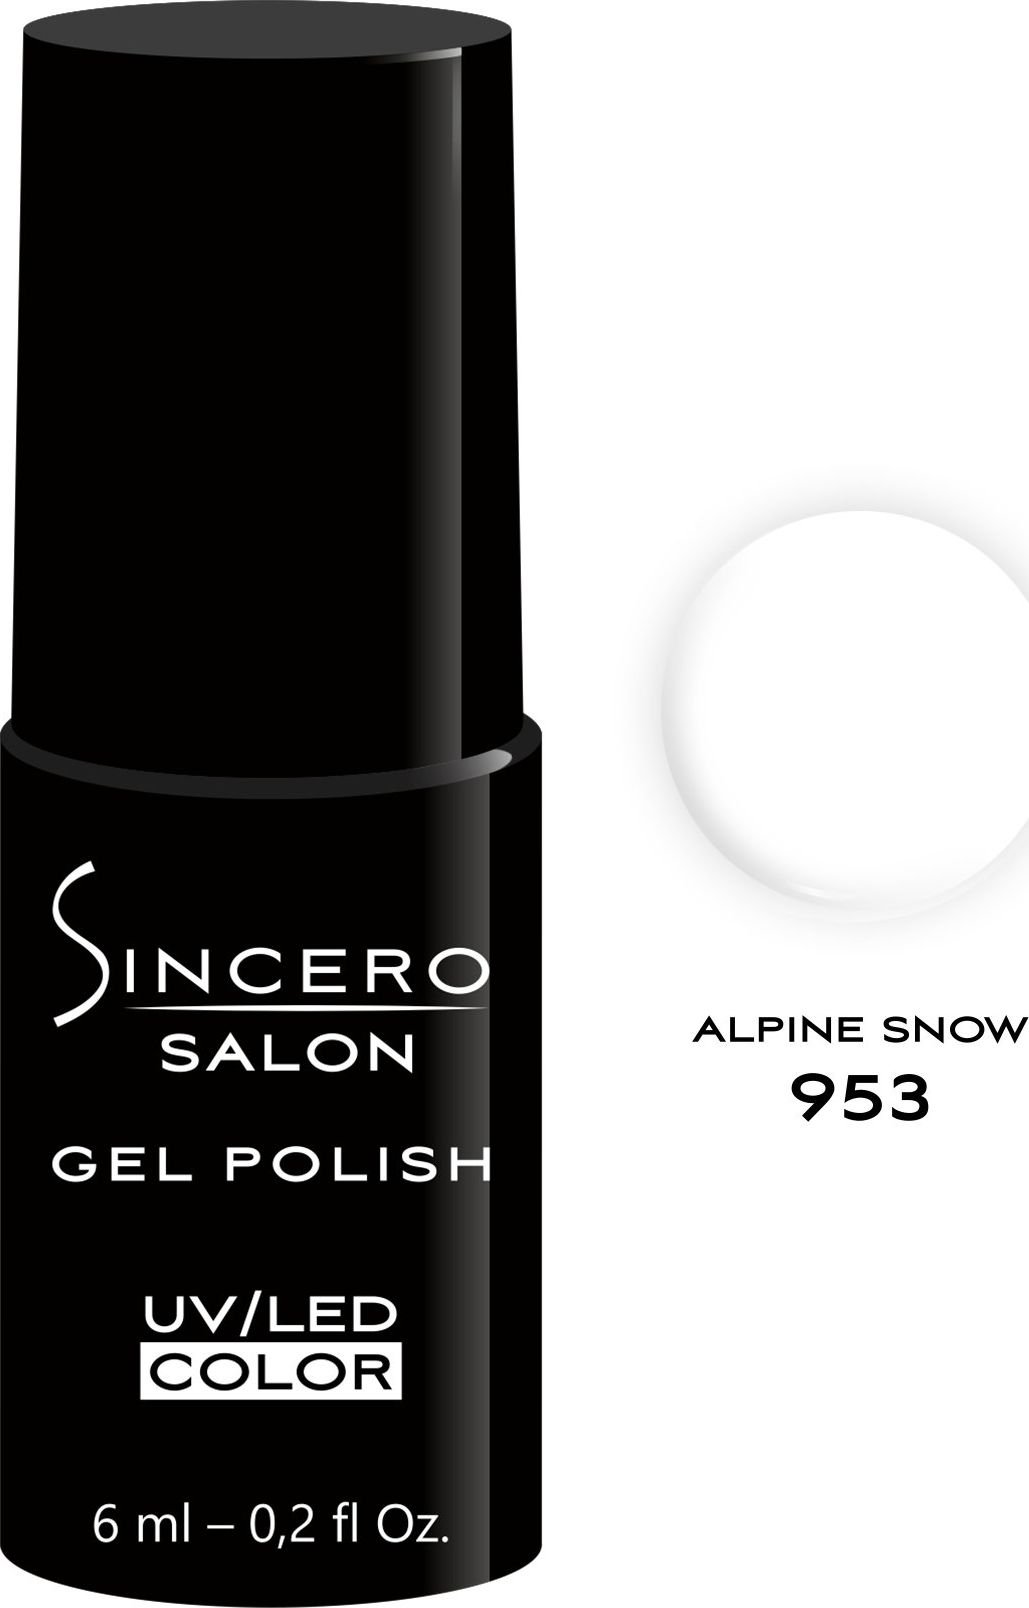 Sincero Salon Gel Polish UV/LED 953 Alpine Snow 6ml